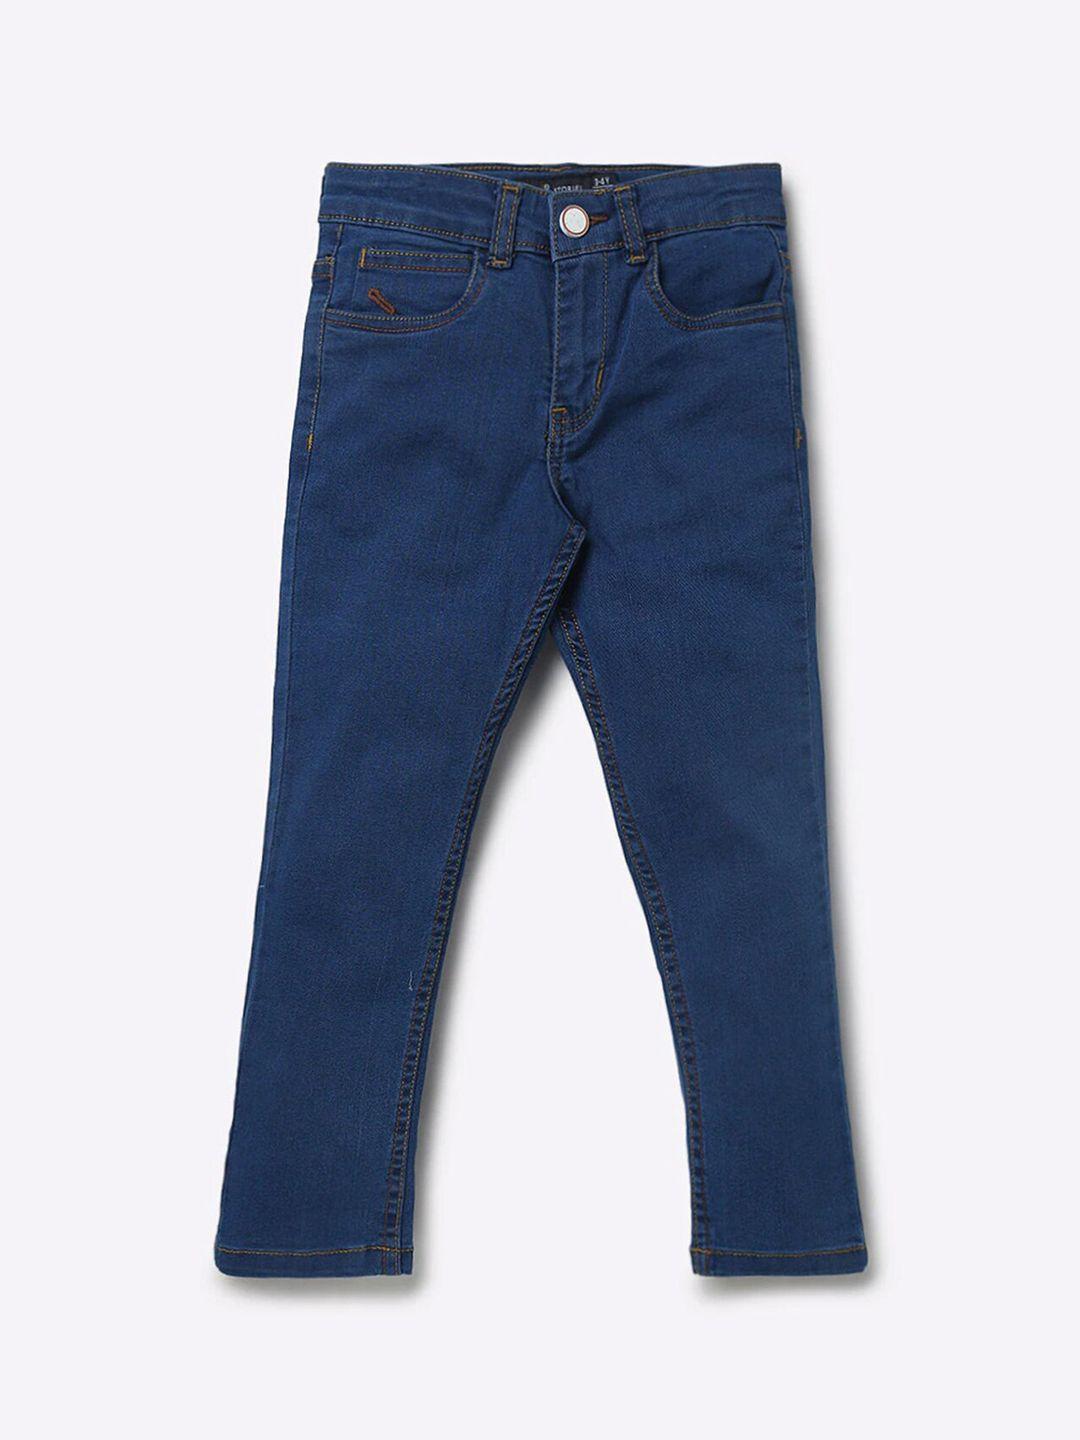 tales-&-stories-boys-blue-slim-fit-stretchable-jeans